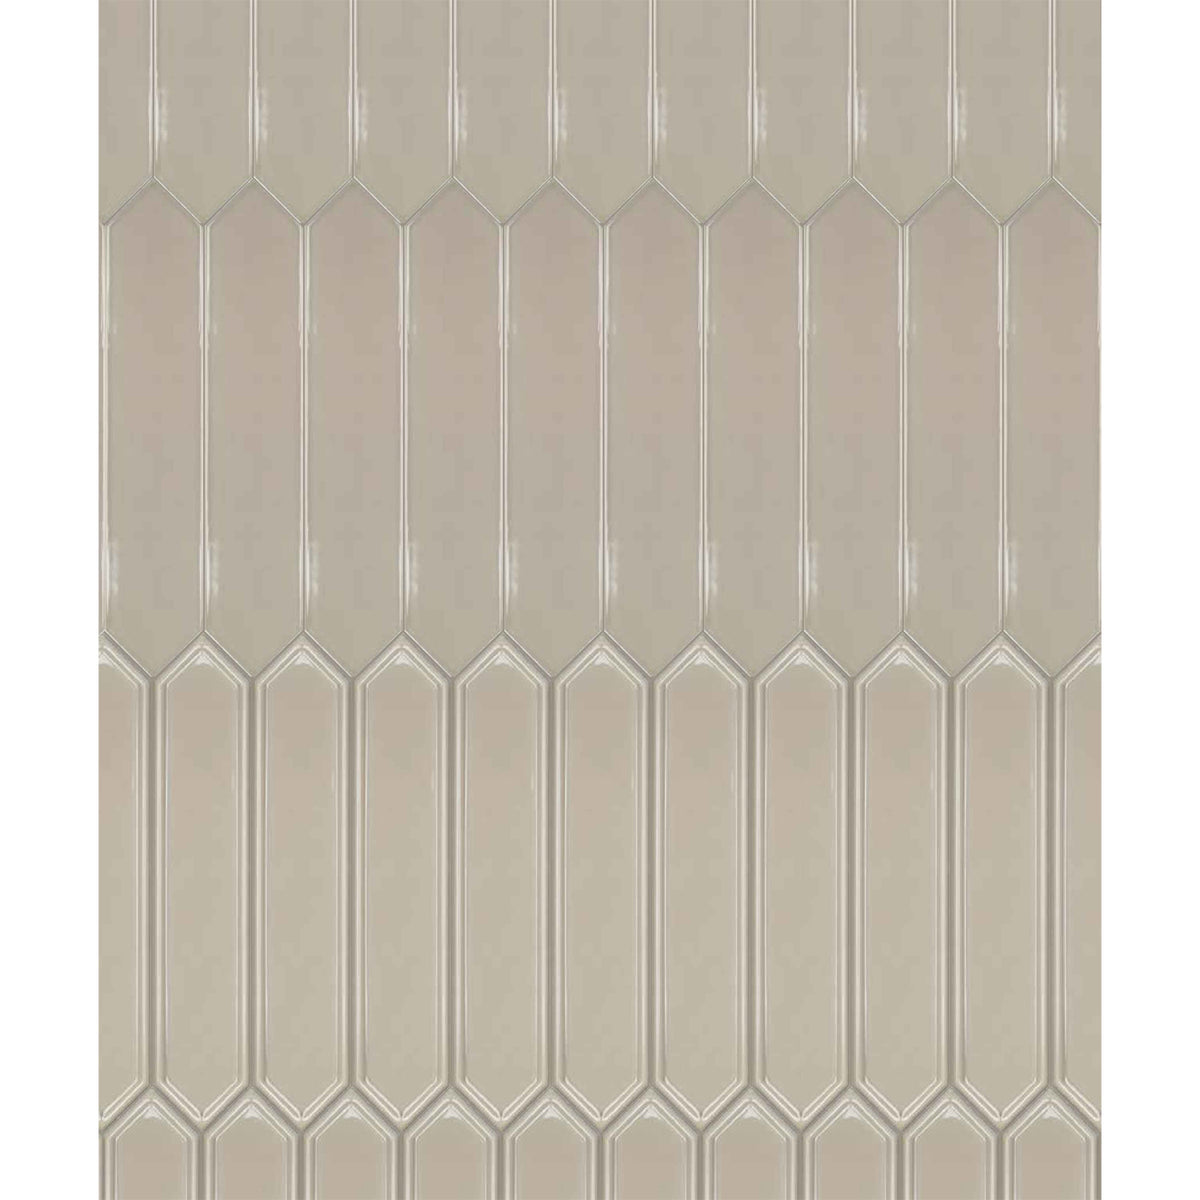 Topcu - Naima - 2.5 in. x 12 in. Ceramic Wall Tile - Alhambra Stone